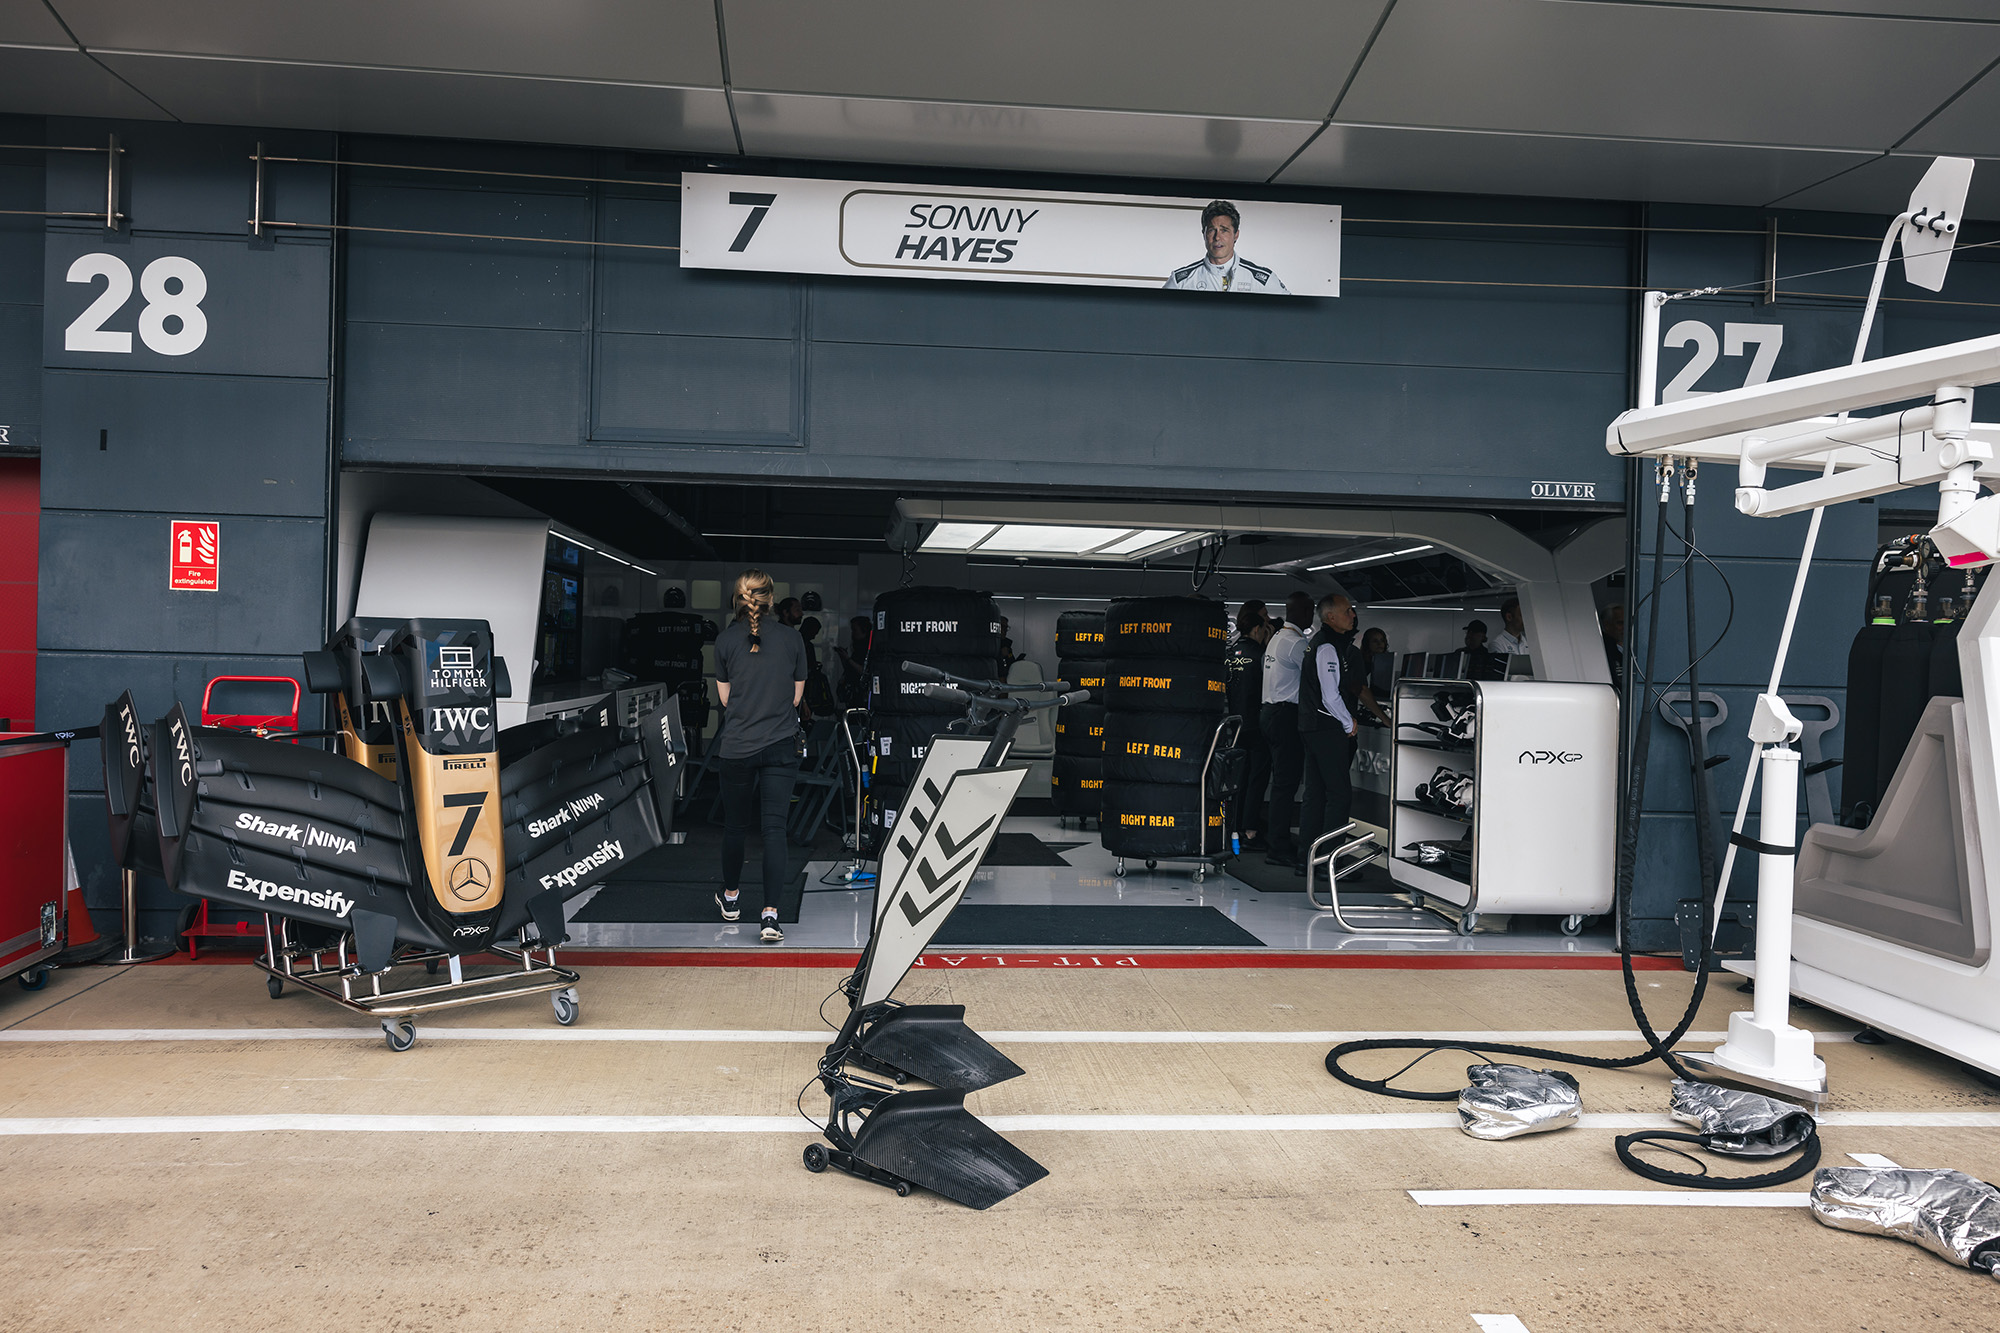 F1 APXGP garage